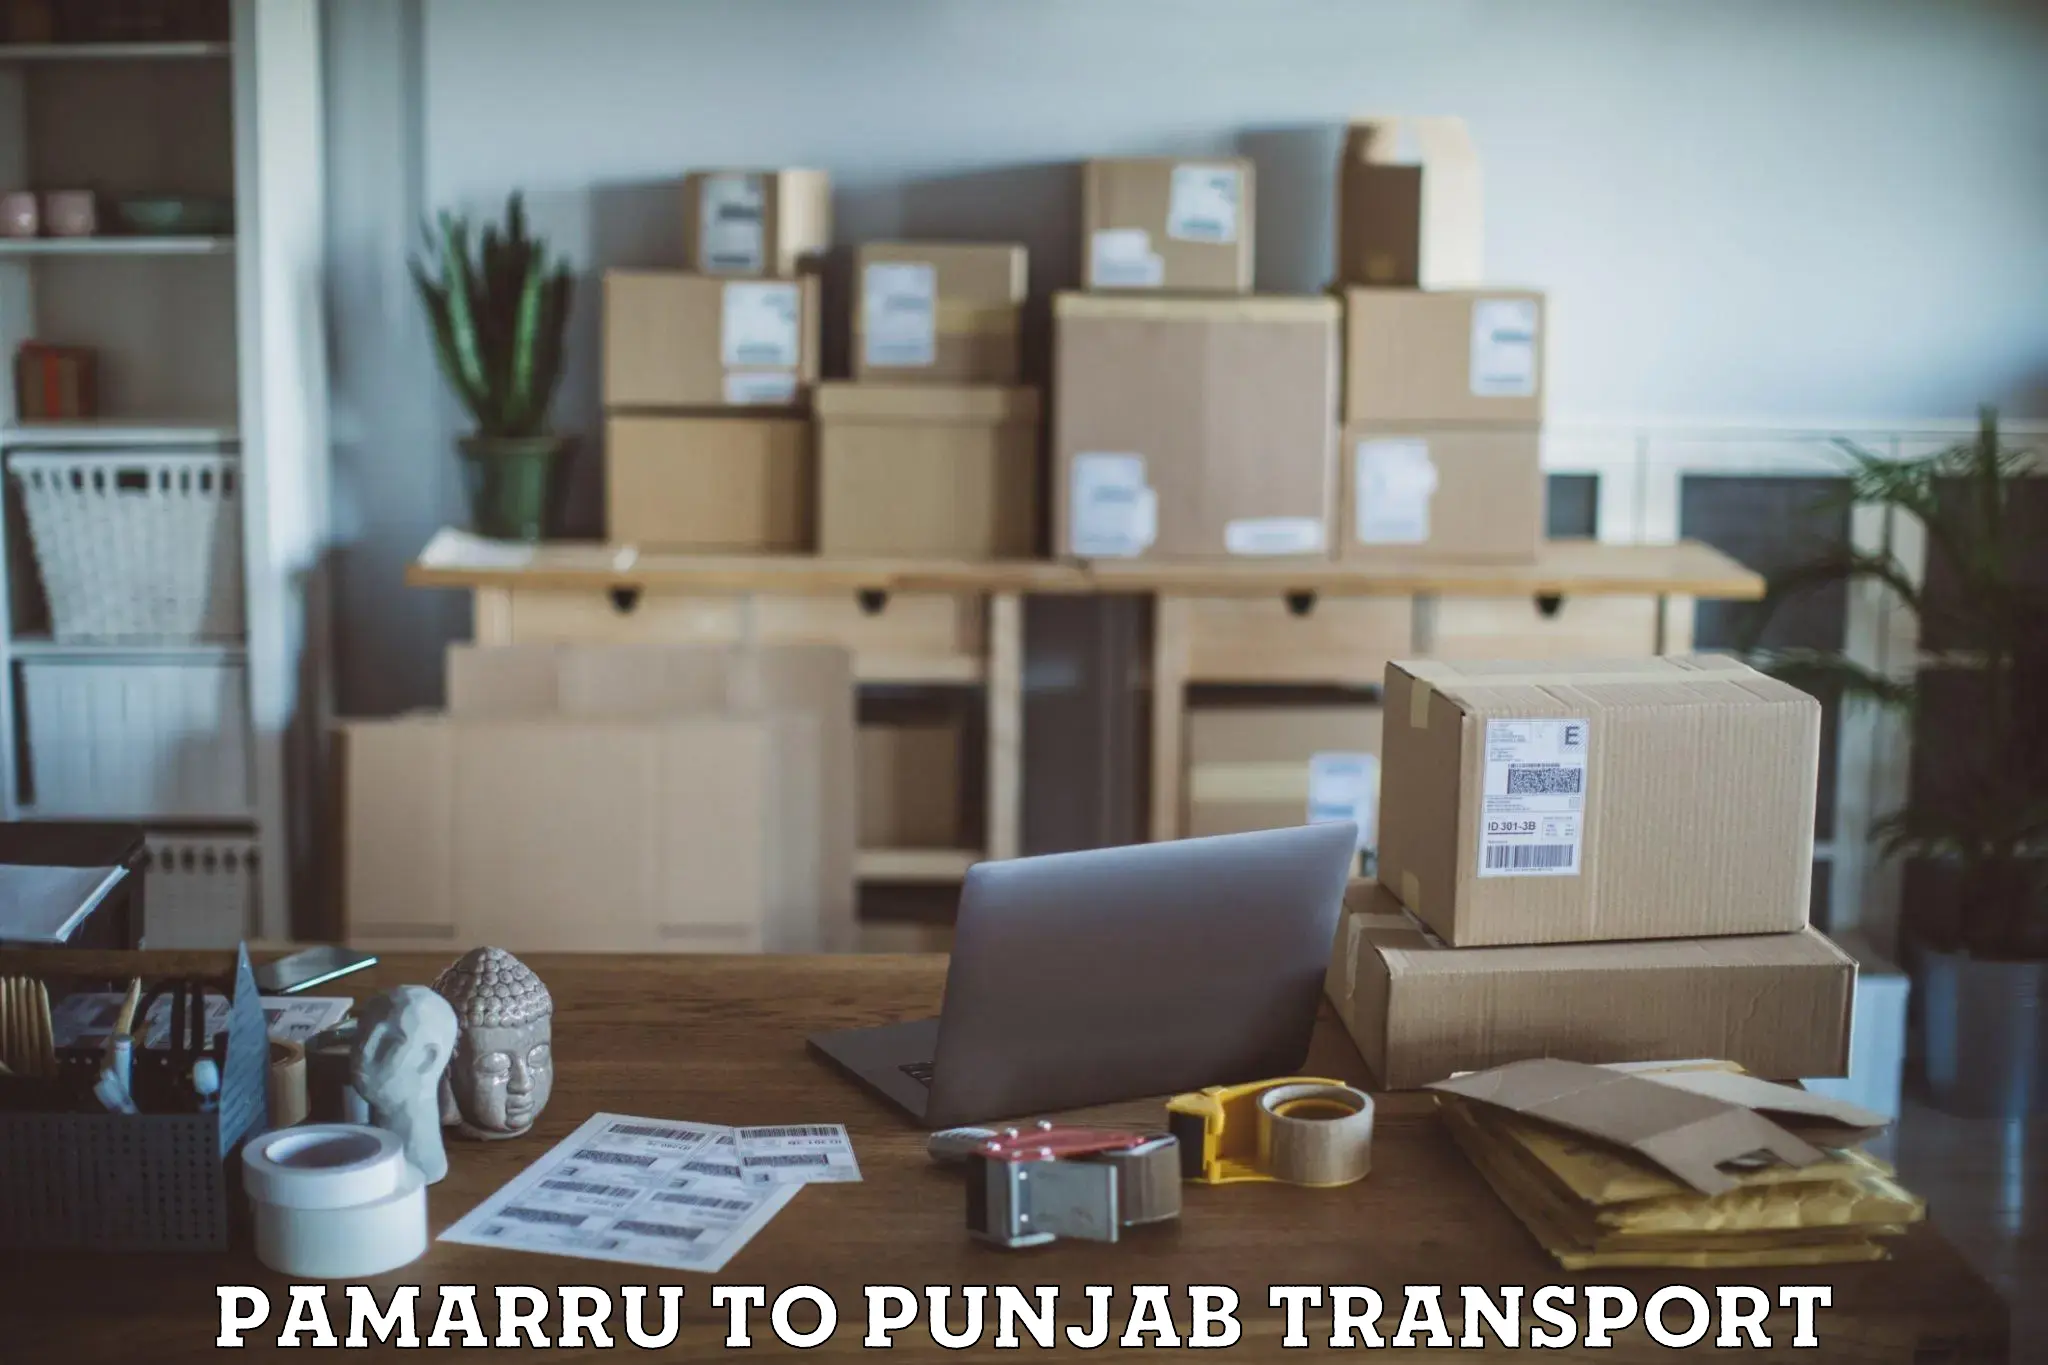 Daily parcel service transport Pamarru to Punjab